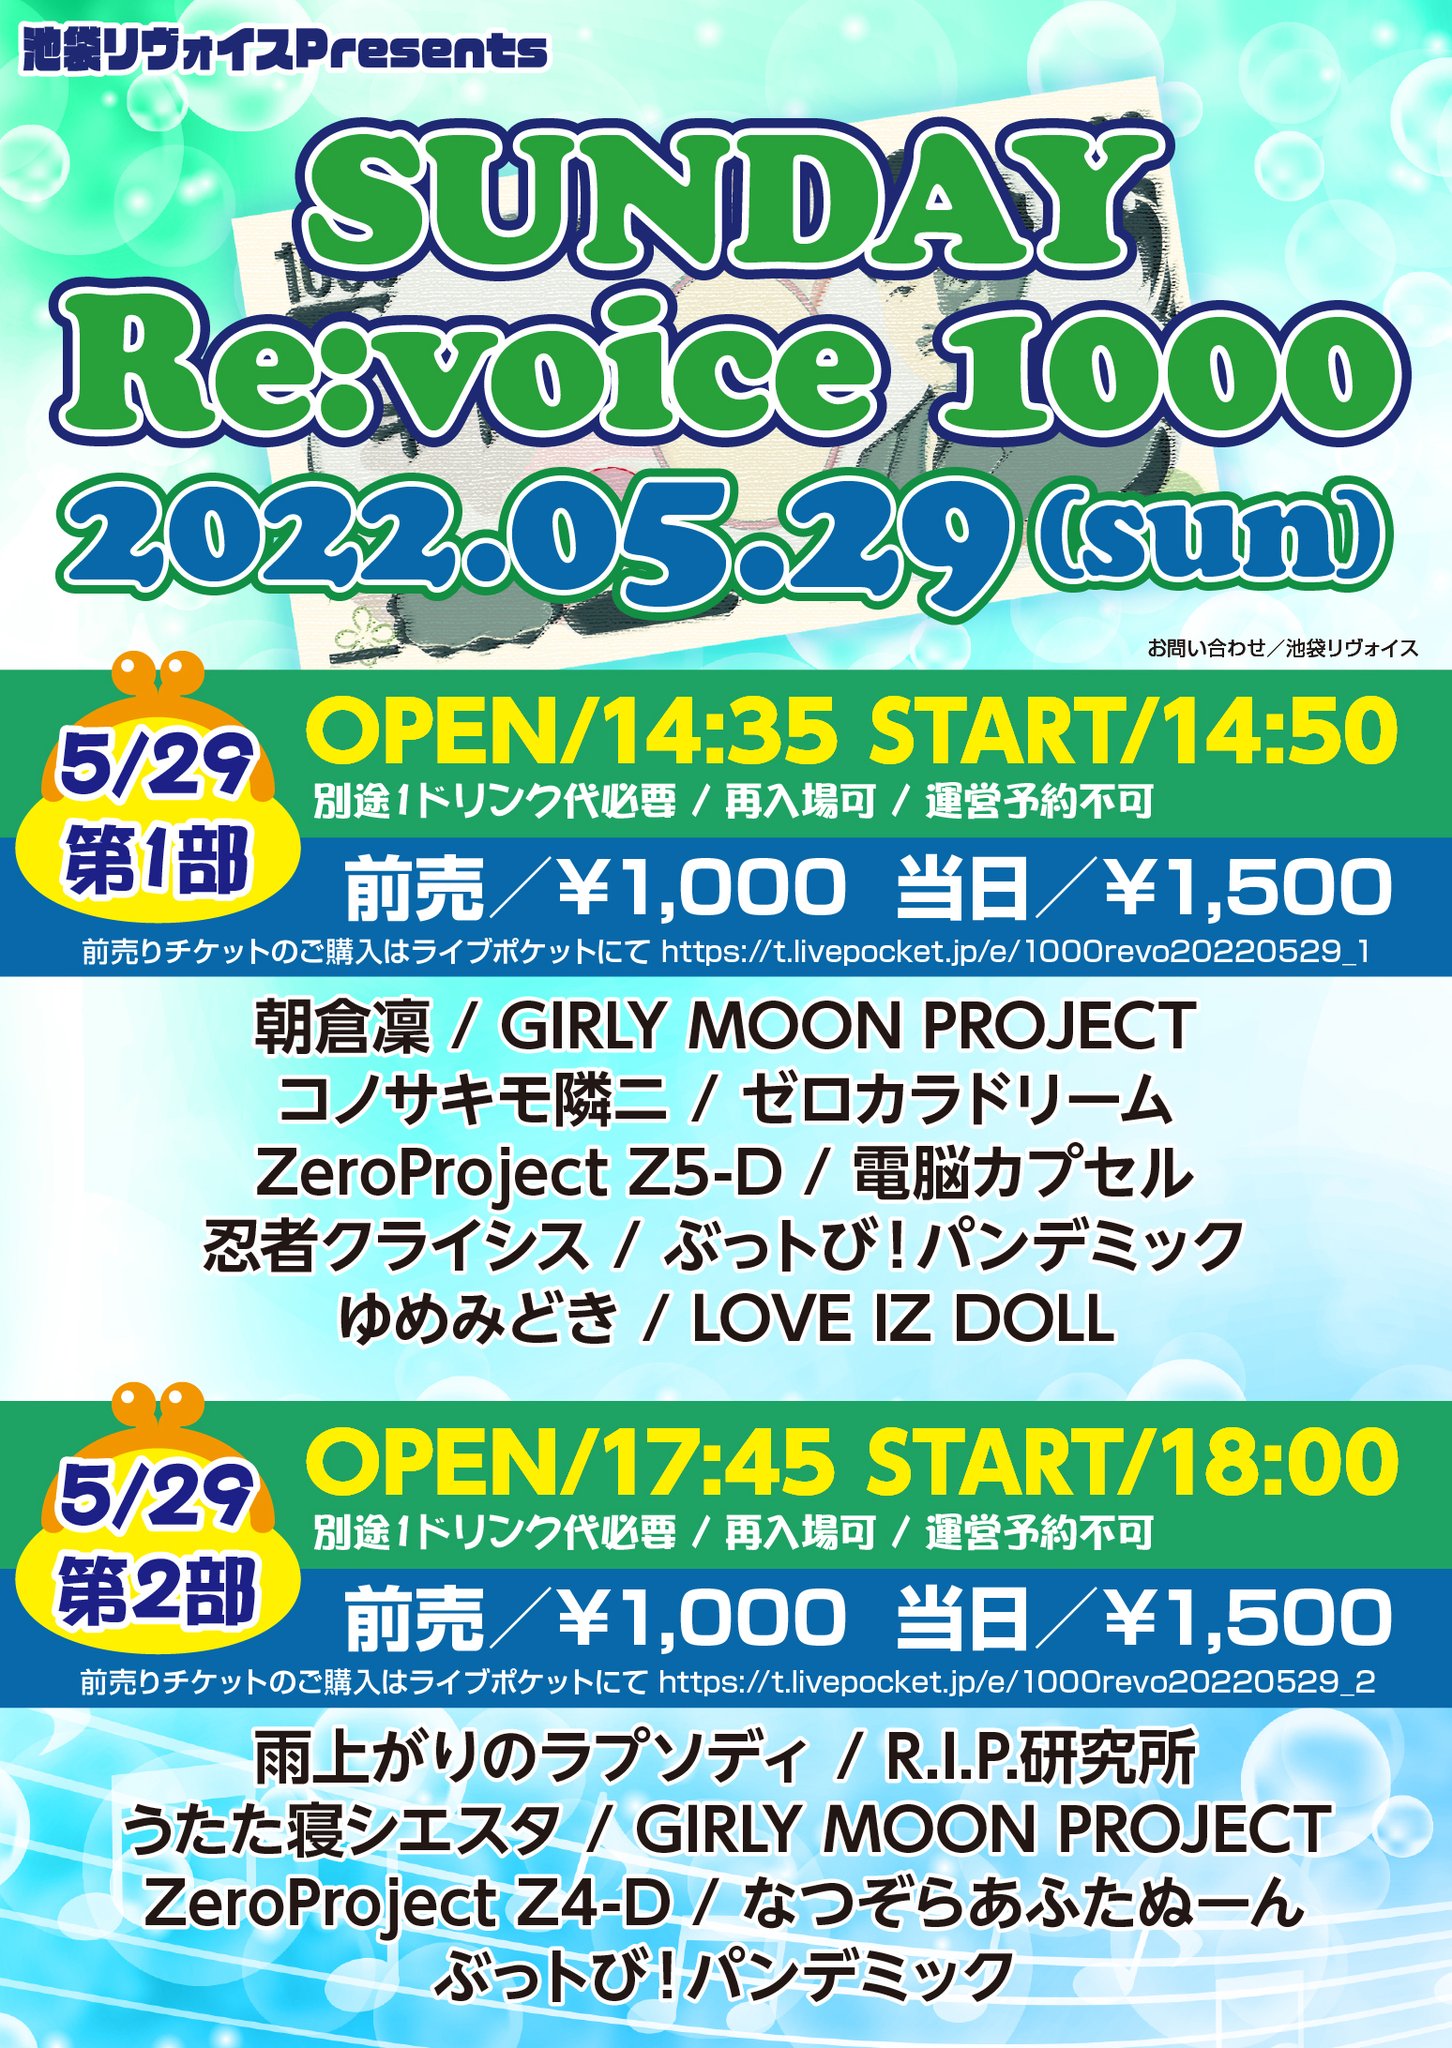 【第二部】SUNDAY Re:voice 1000